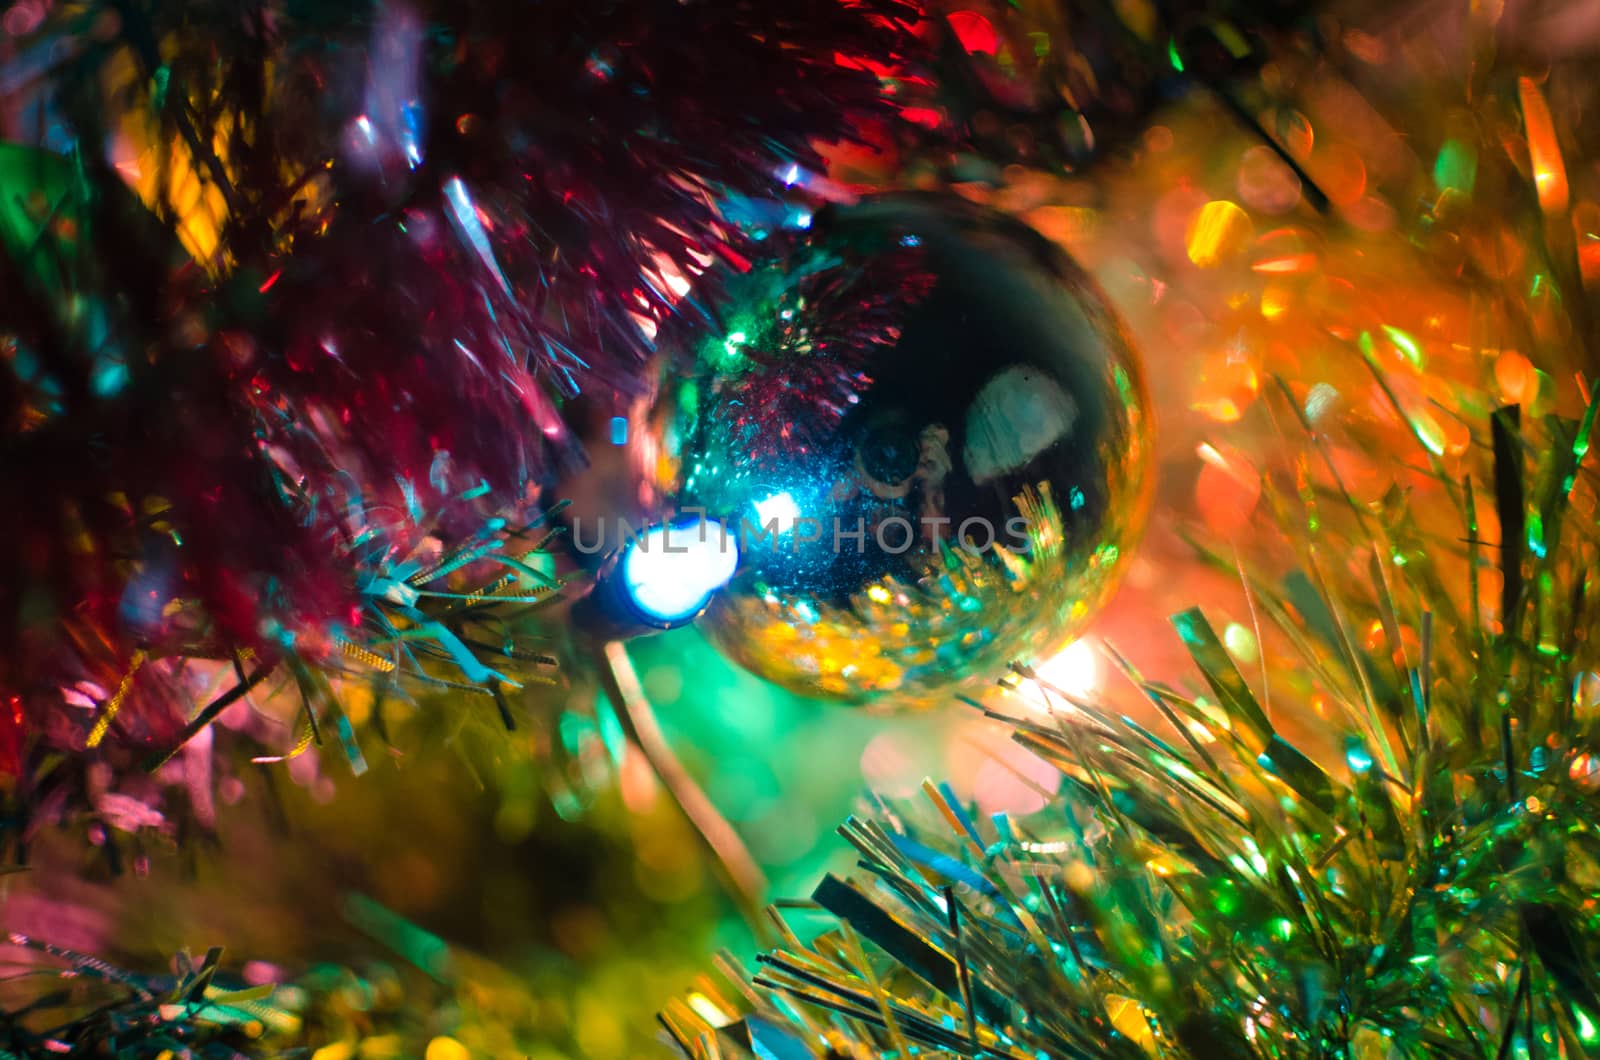 Magical Christmas tree ball by mikelju